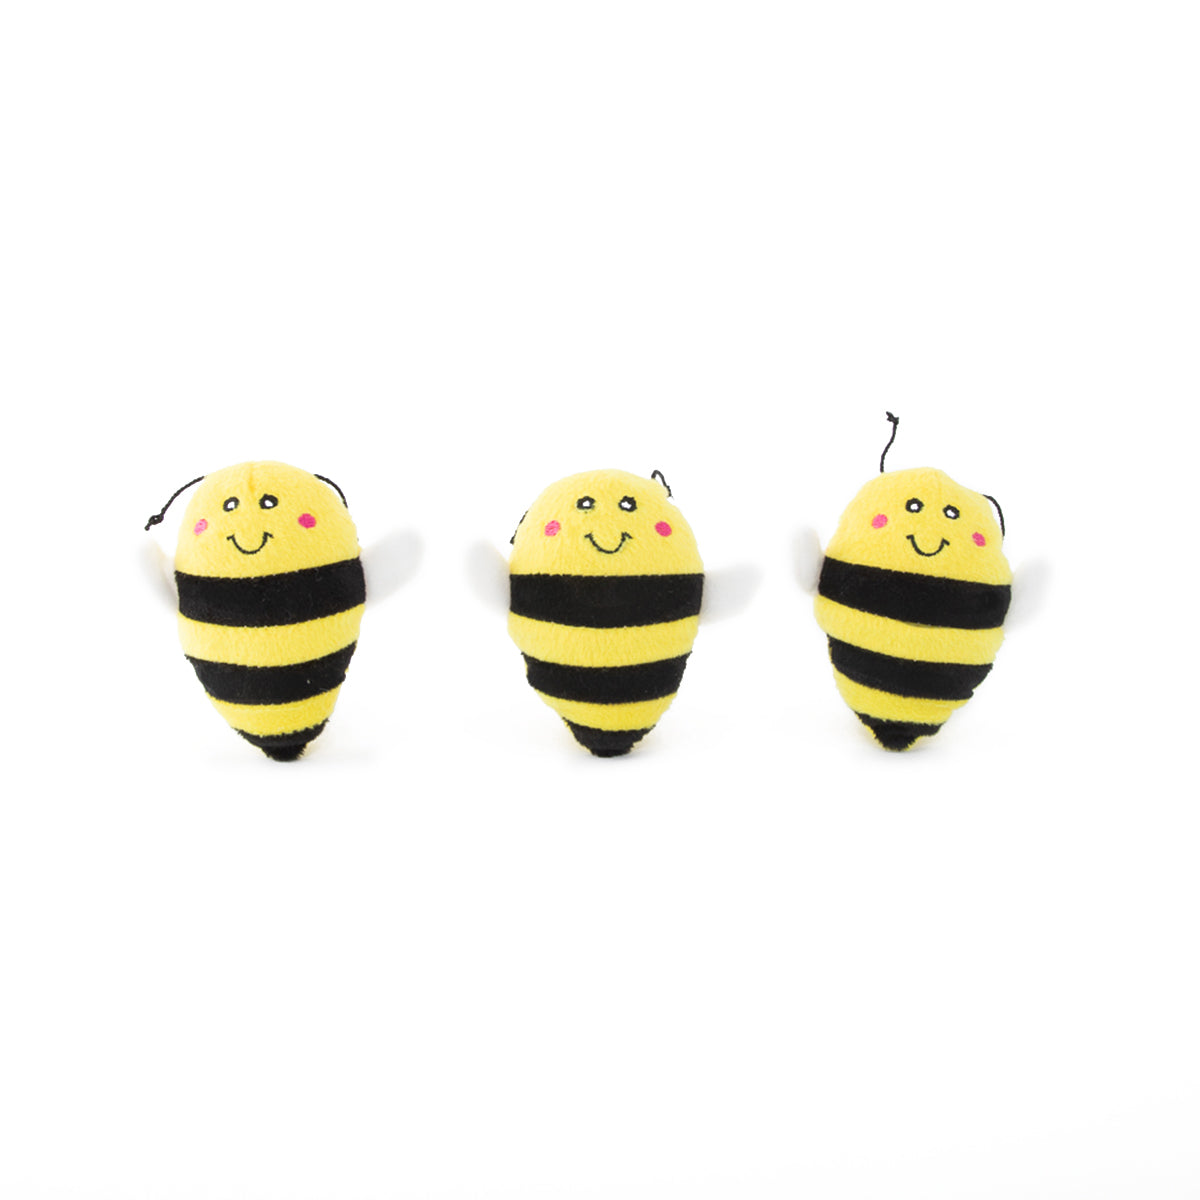 ZIPPY PAWS - Zippy Burrows Honey Pot Interactive Plush Toy